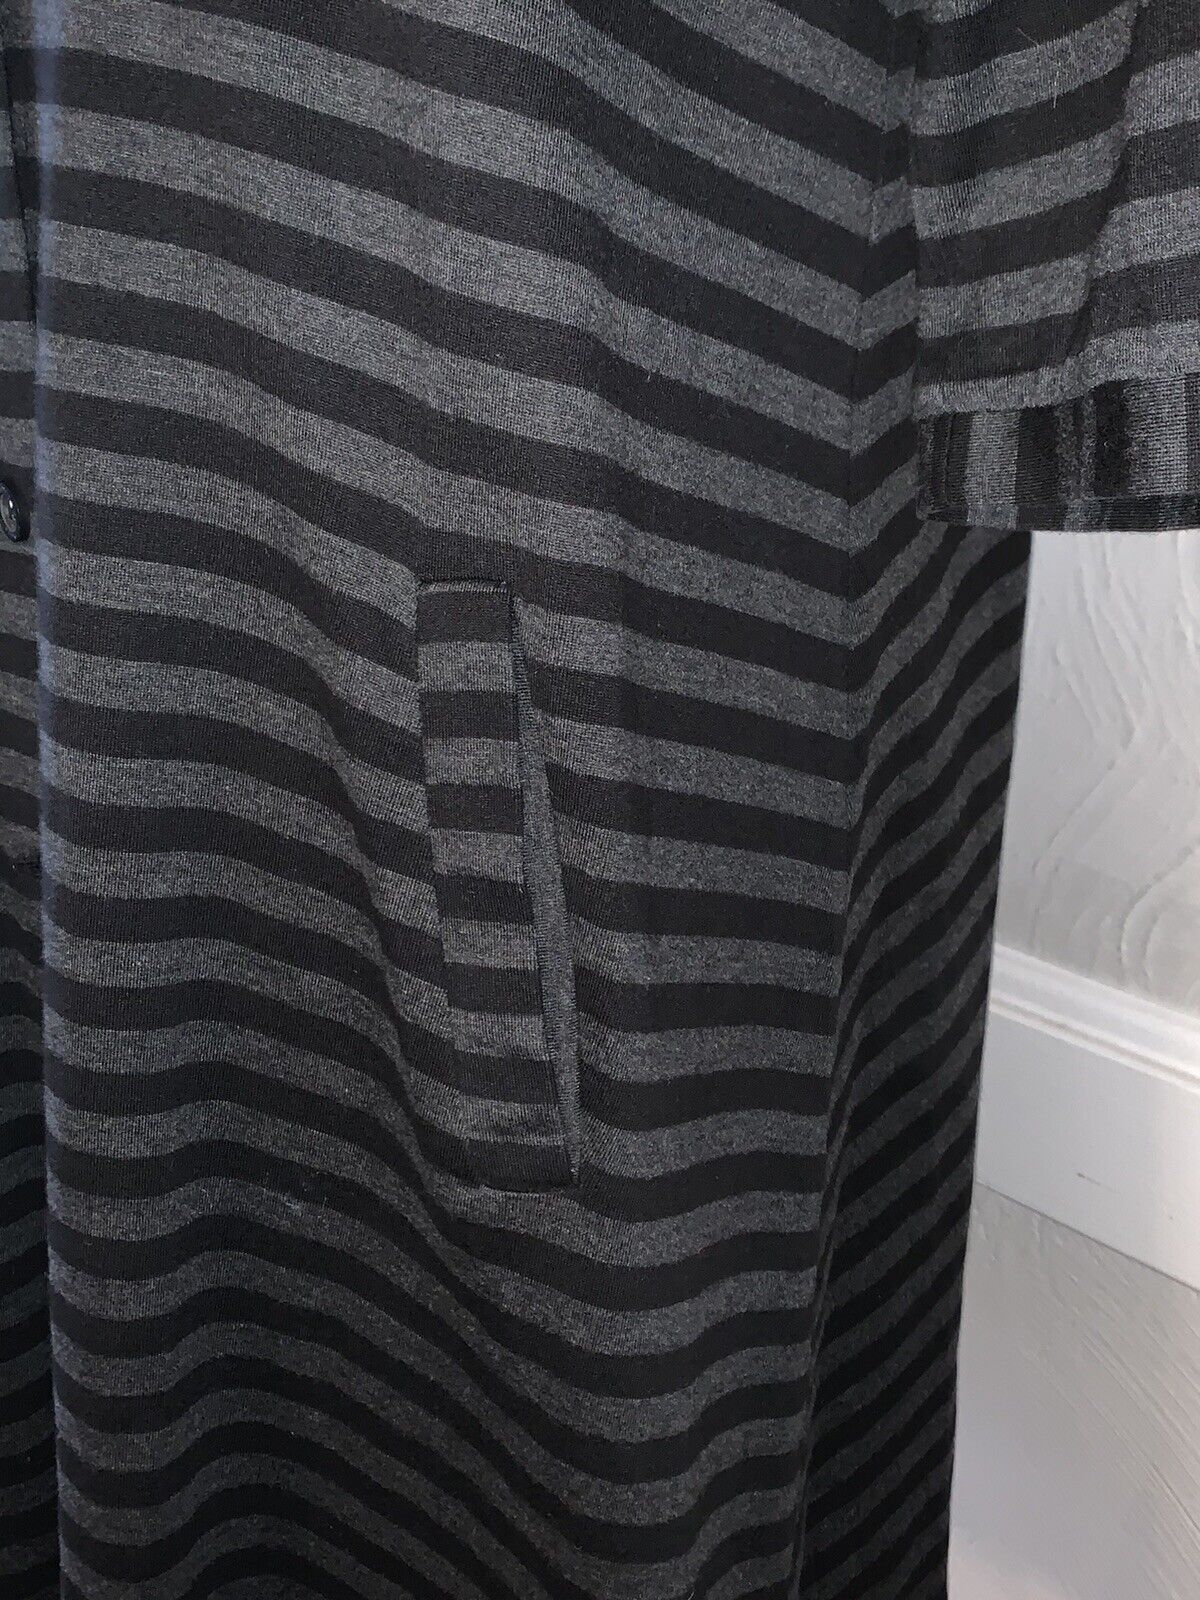 Marimekko KASTE tunic dress size M: black and gra… - image 2